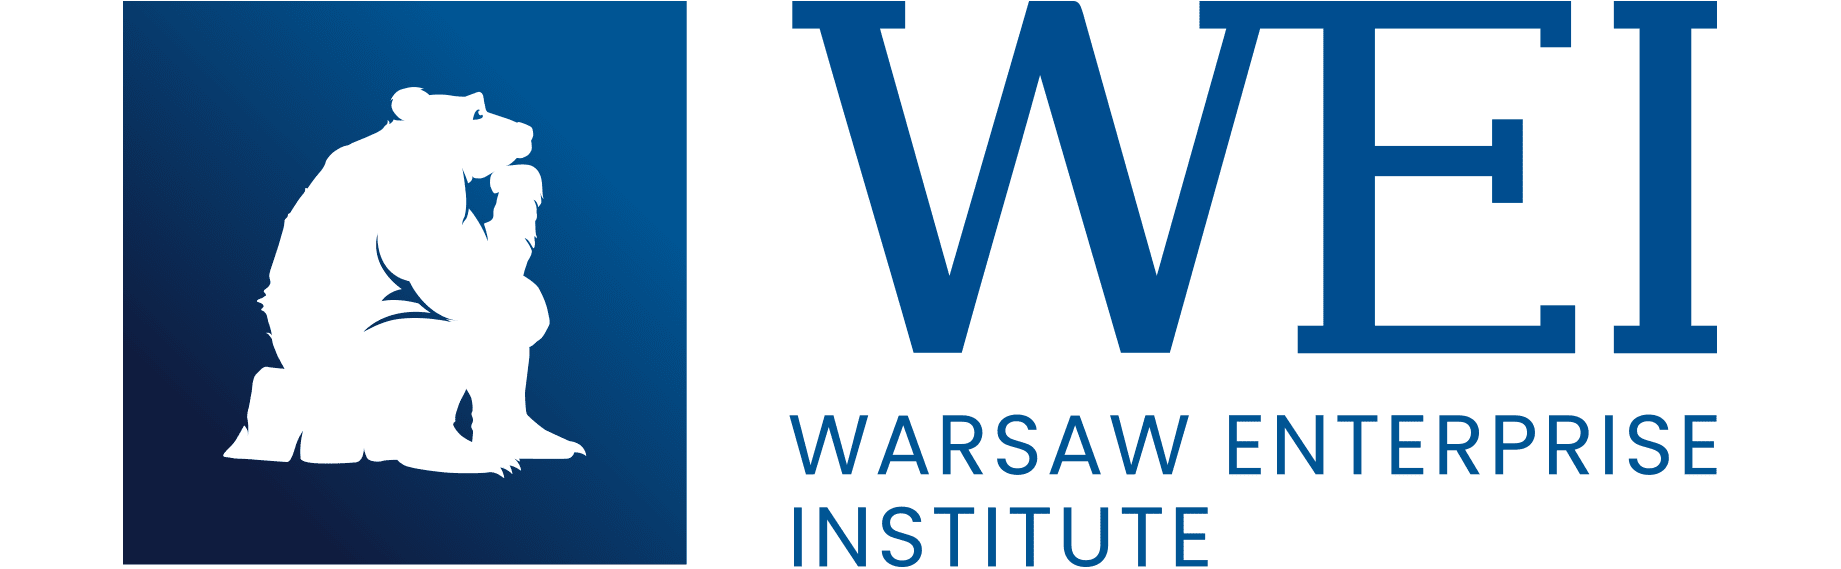 Warsaw Enterprise Institute